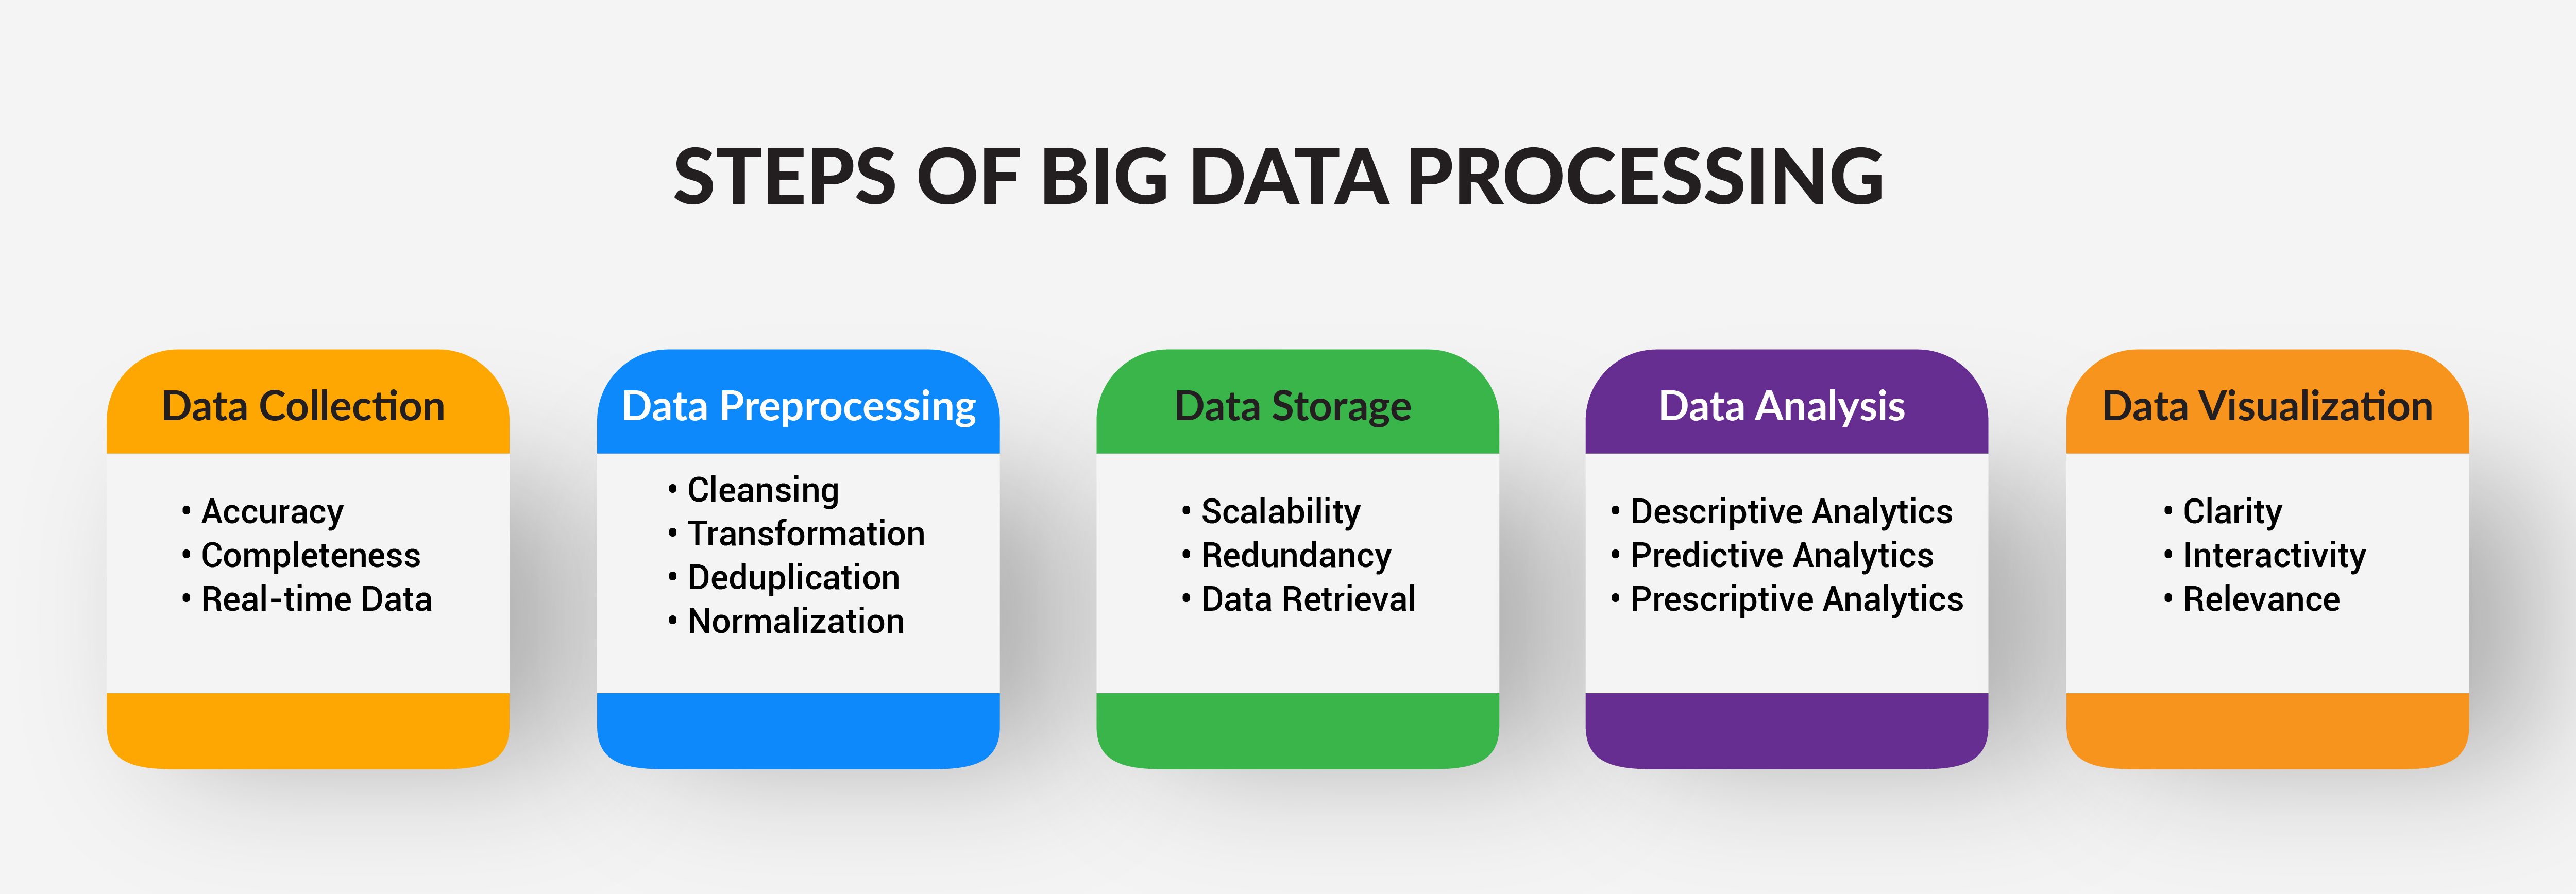 Steps of Big Data Processing